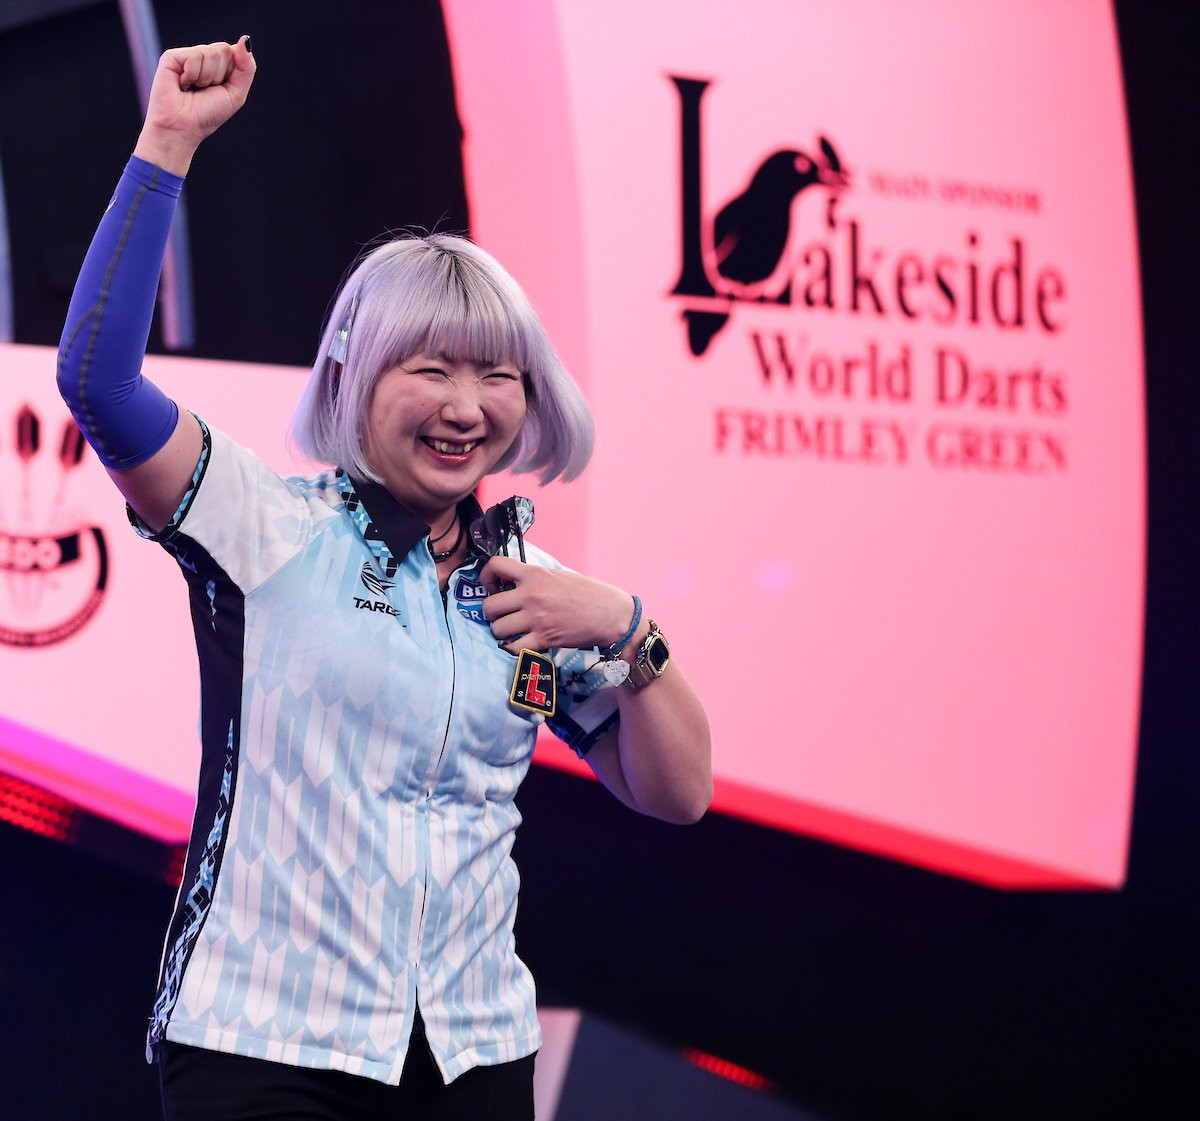 Mikuru Suzuki claimed a shock win over Lisa Ashton ©BDO